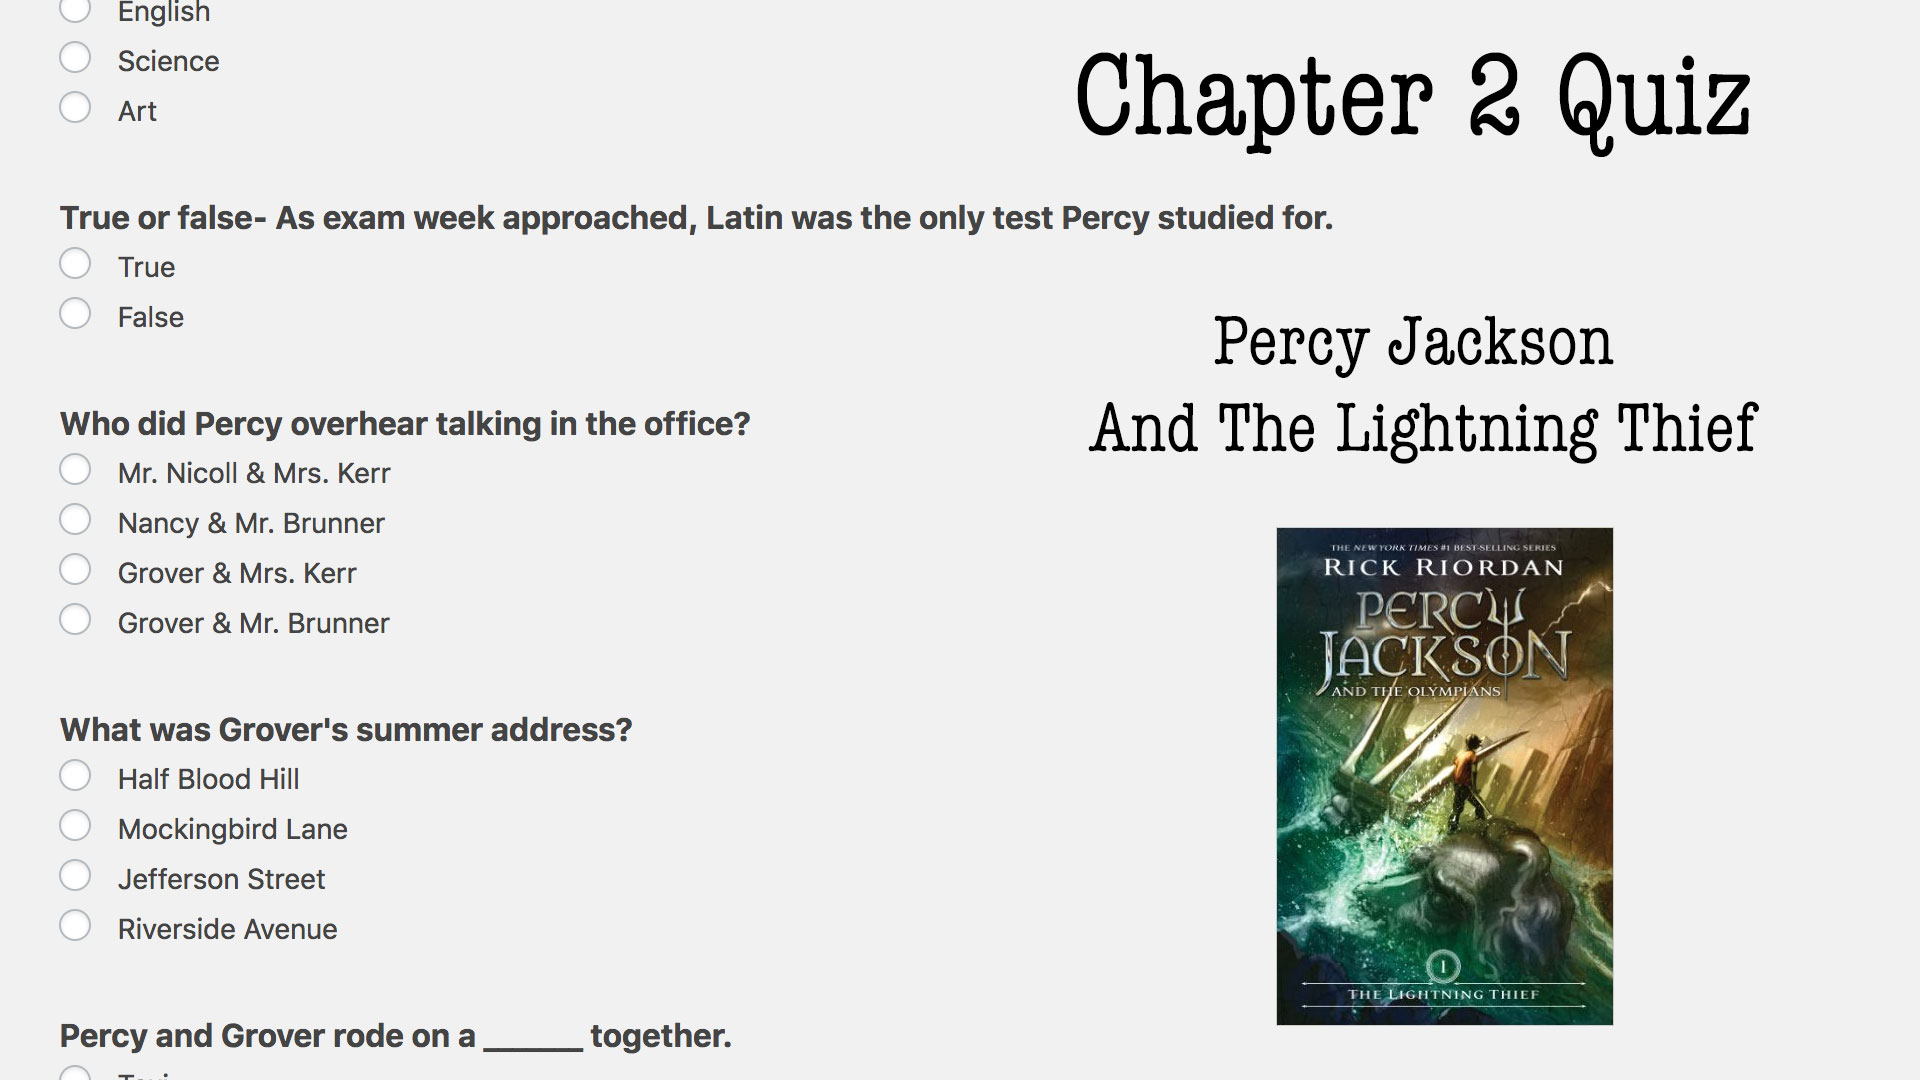 Chapter 2 Quiz - The Lightning Thief (Percy Jackson Quiz) - Modern